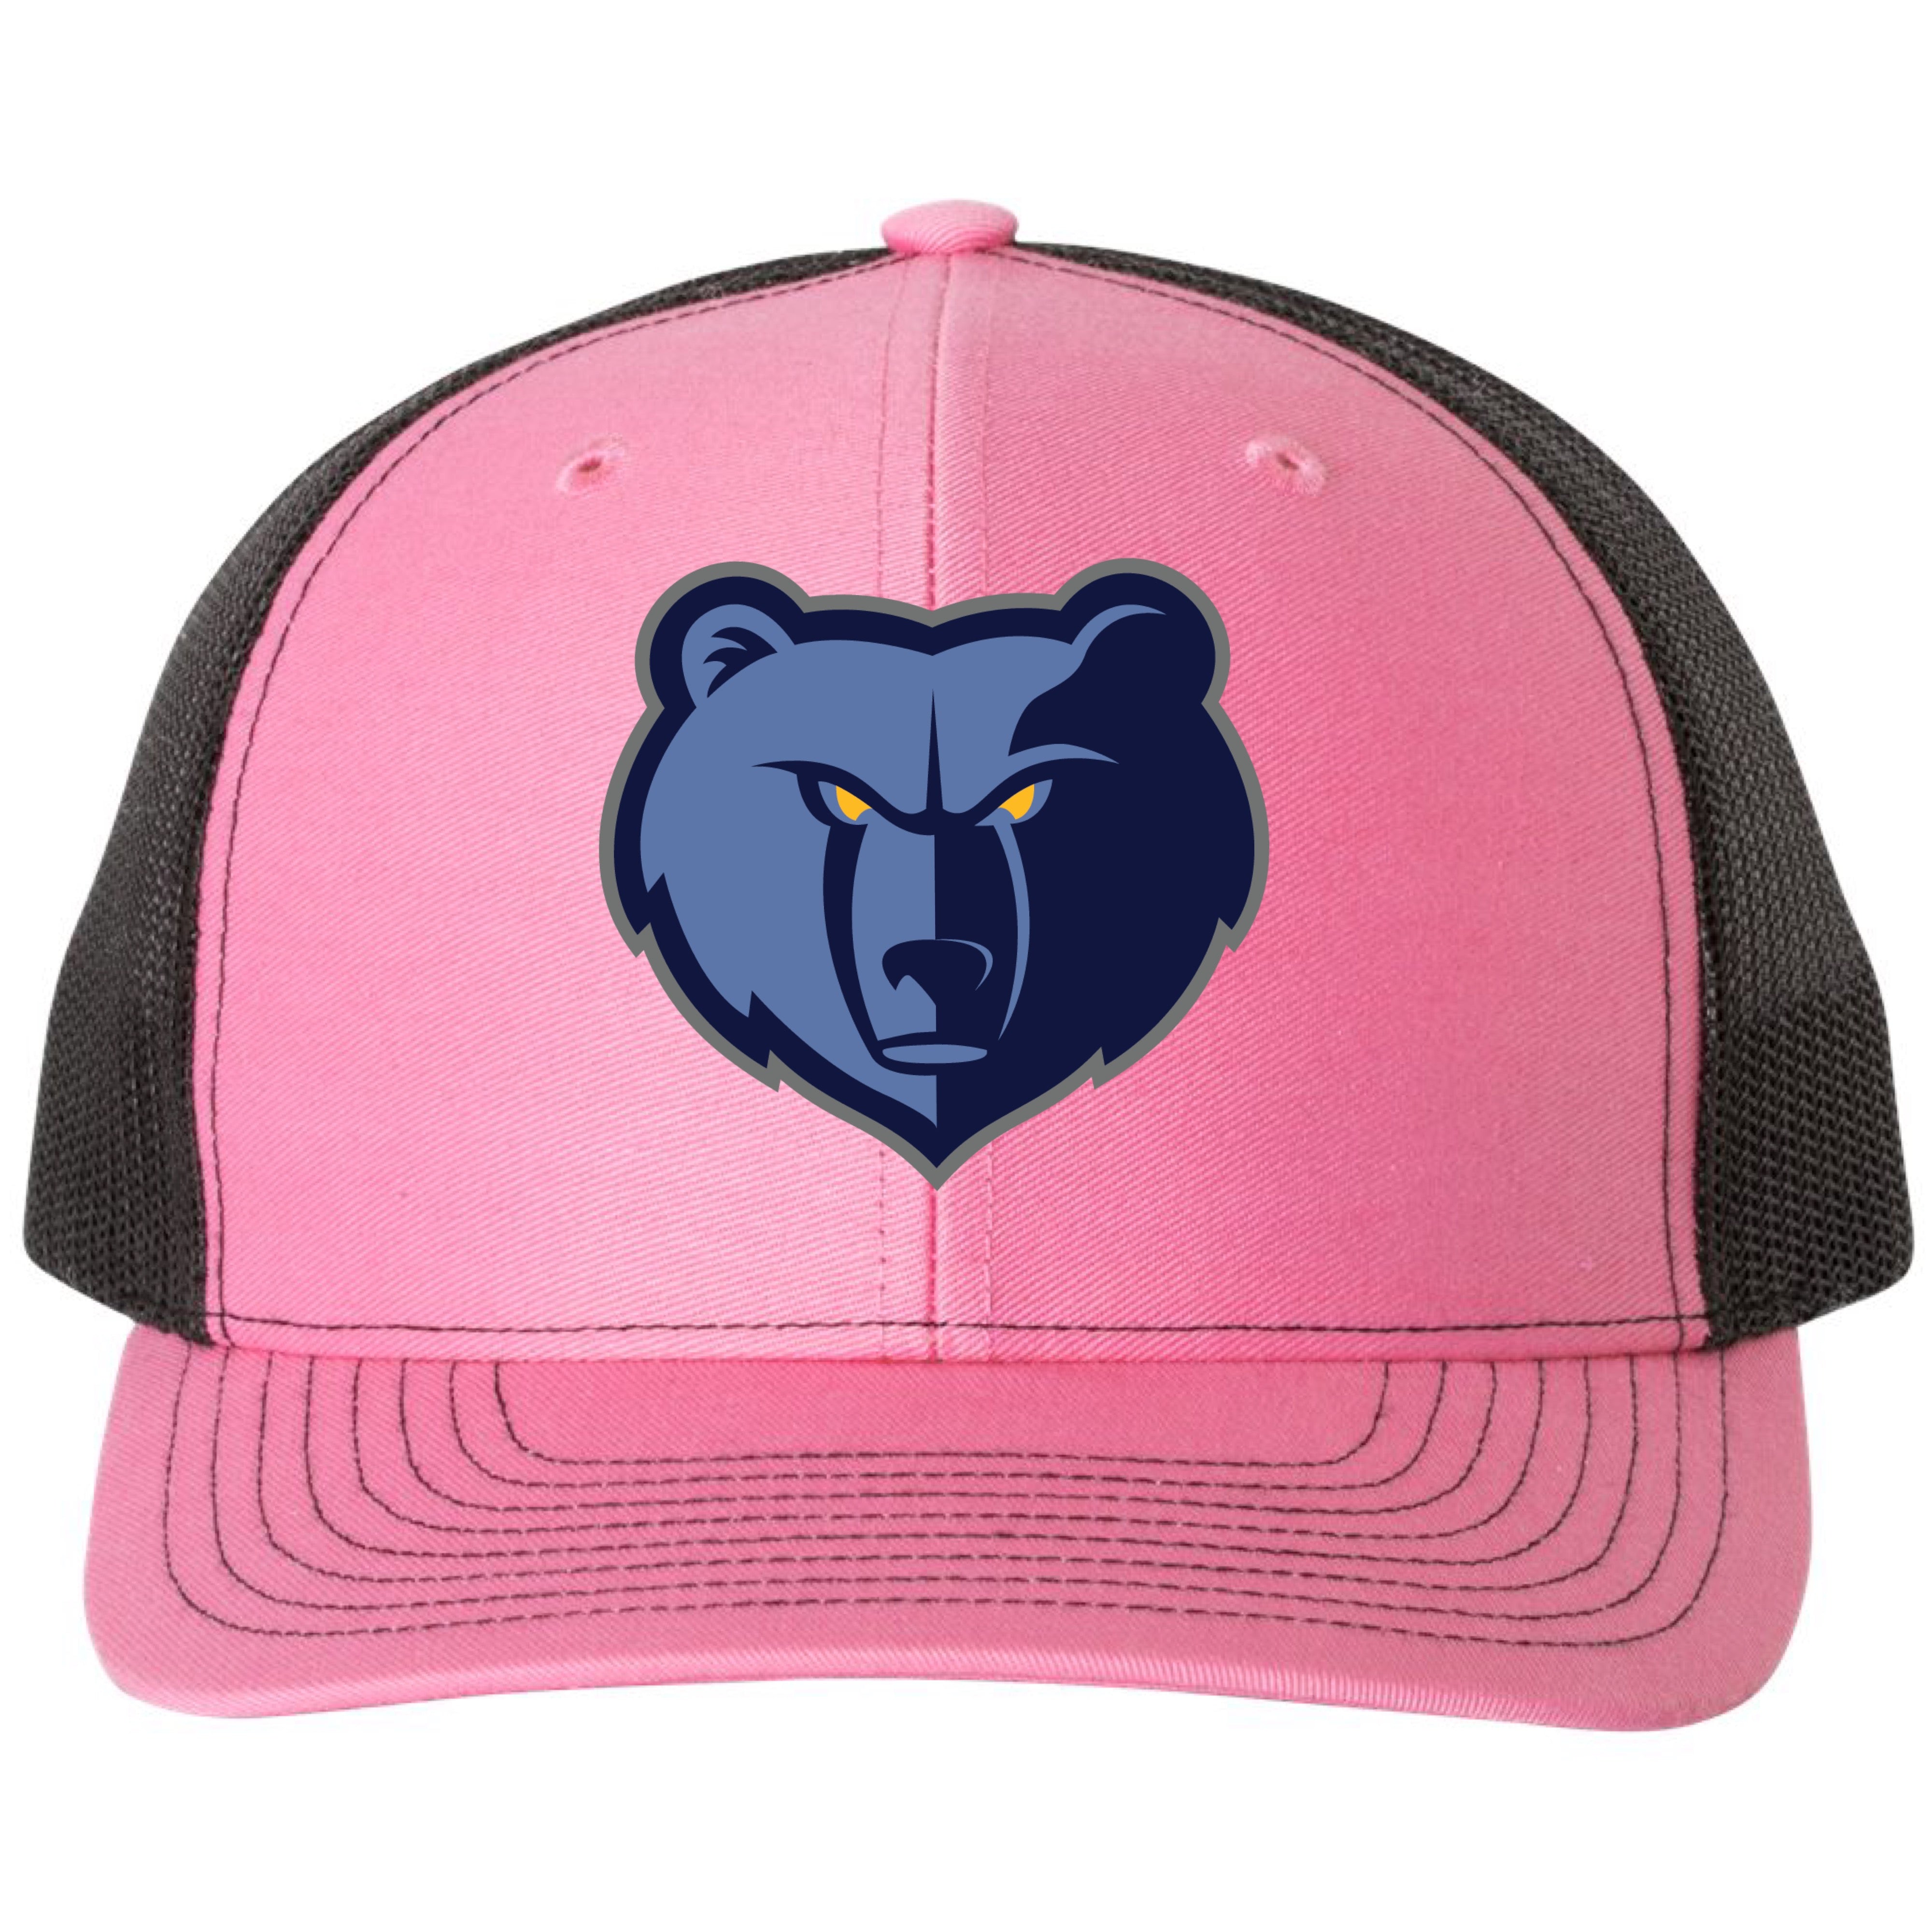 Memphis Grizzlies 3D Snapback Trucker Hat- Hot Pink/ Black